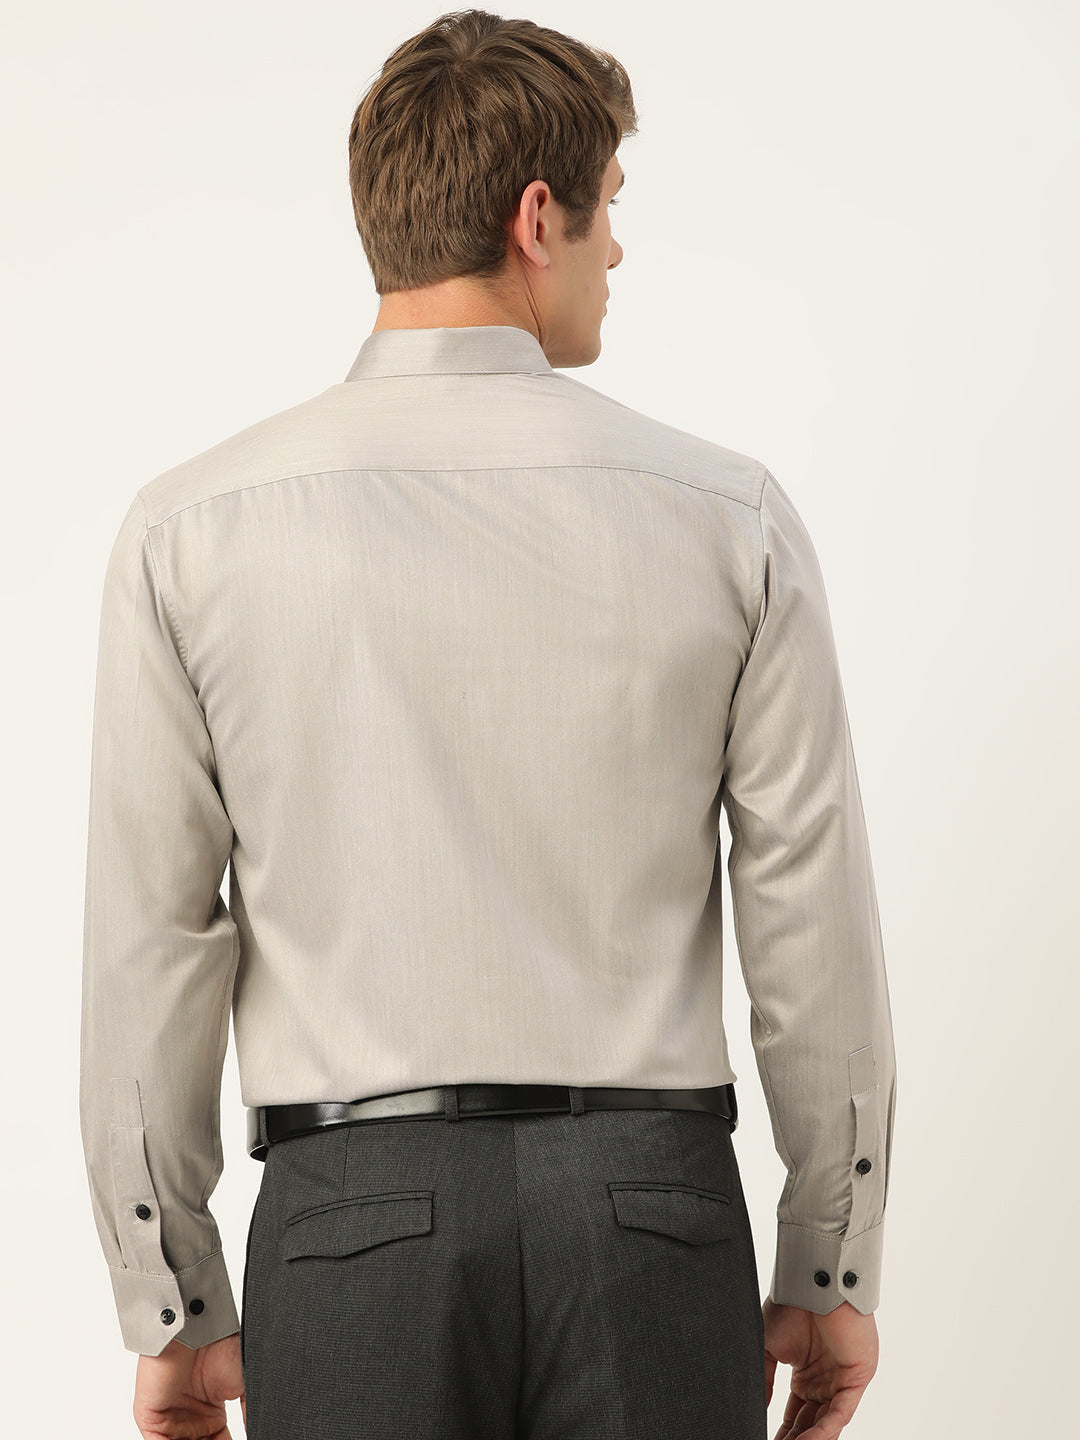 Men's Solid Formal Cotton Shirt ( SF 792Steel-Grey ) - Jainish